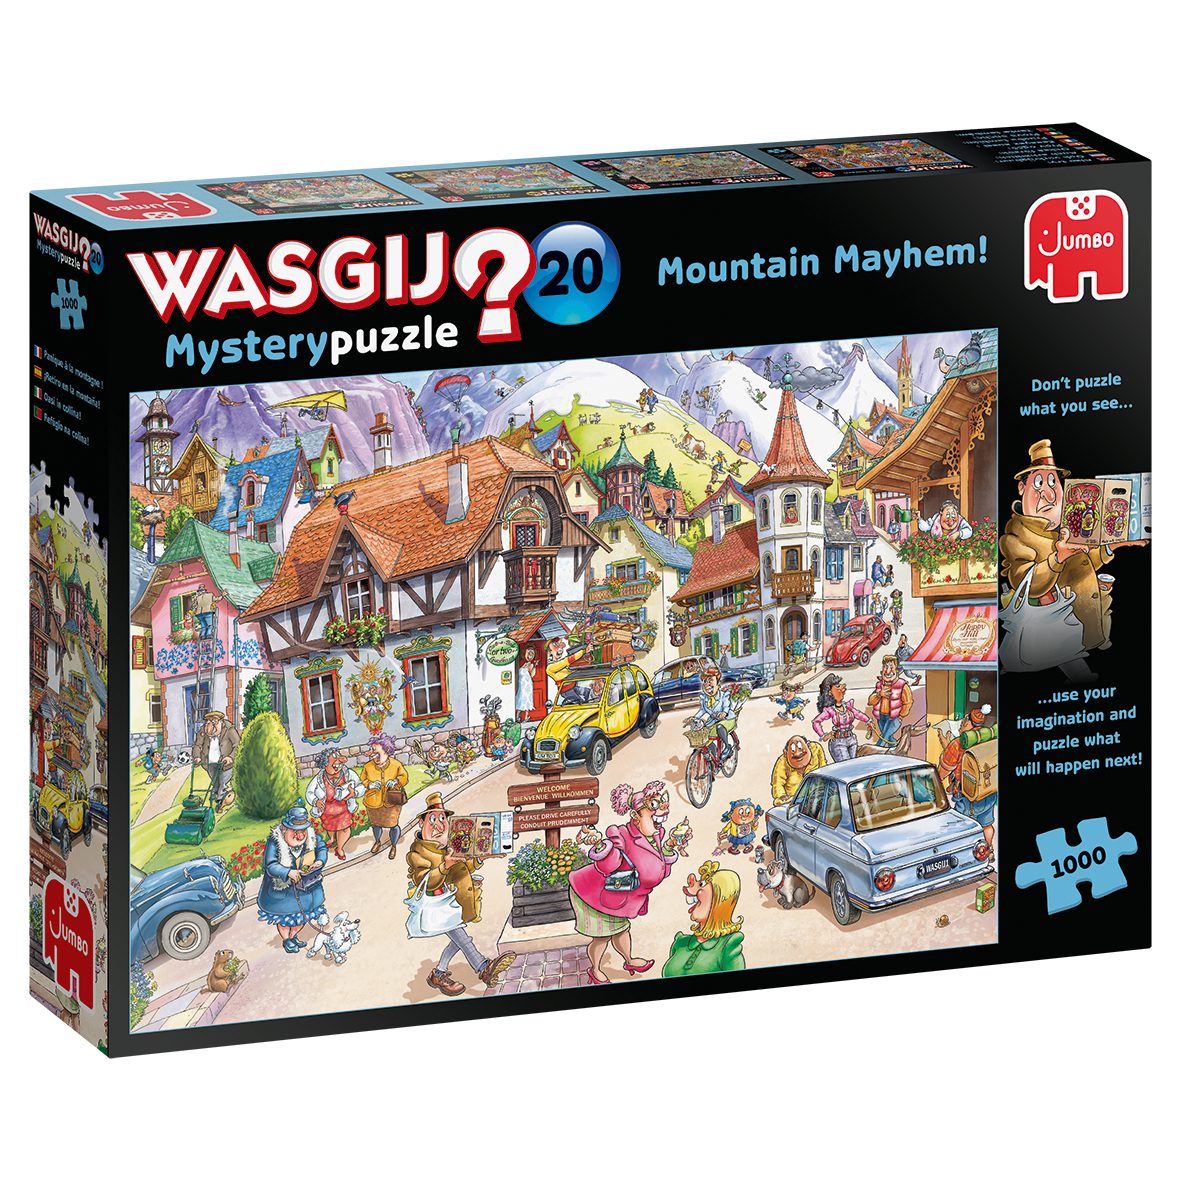 Puzzle 25002 Wasgij Mystery 20 - Idylle in den Bergen!, 1000 Puzzleteile